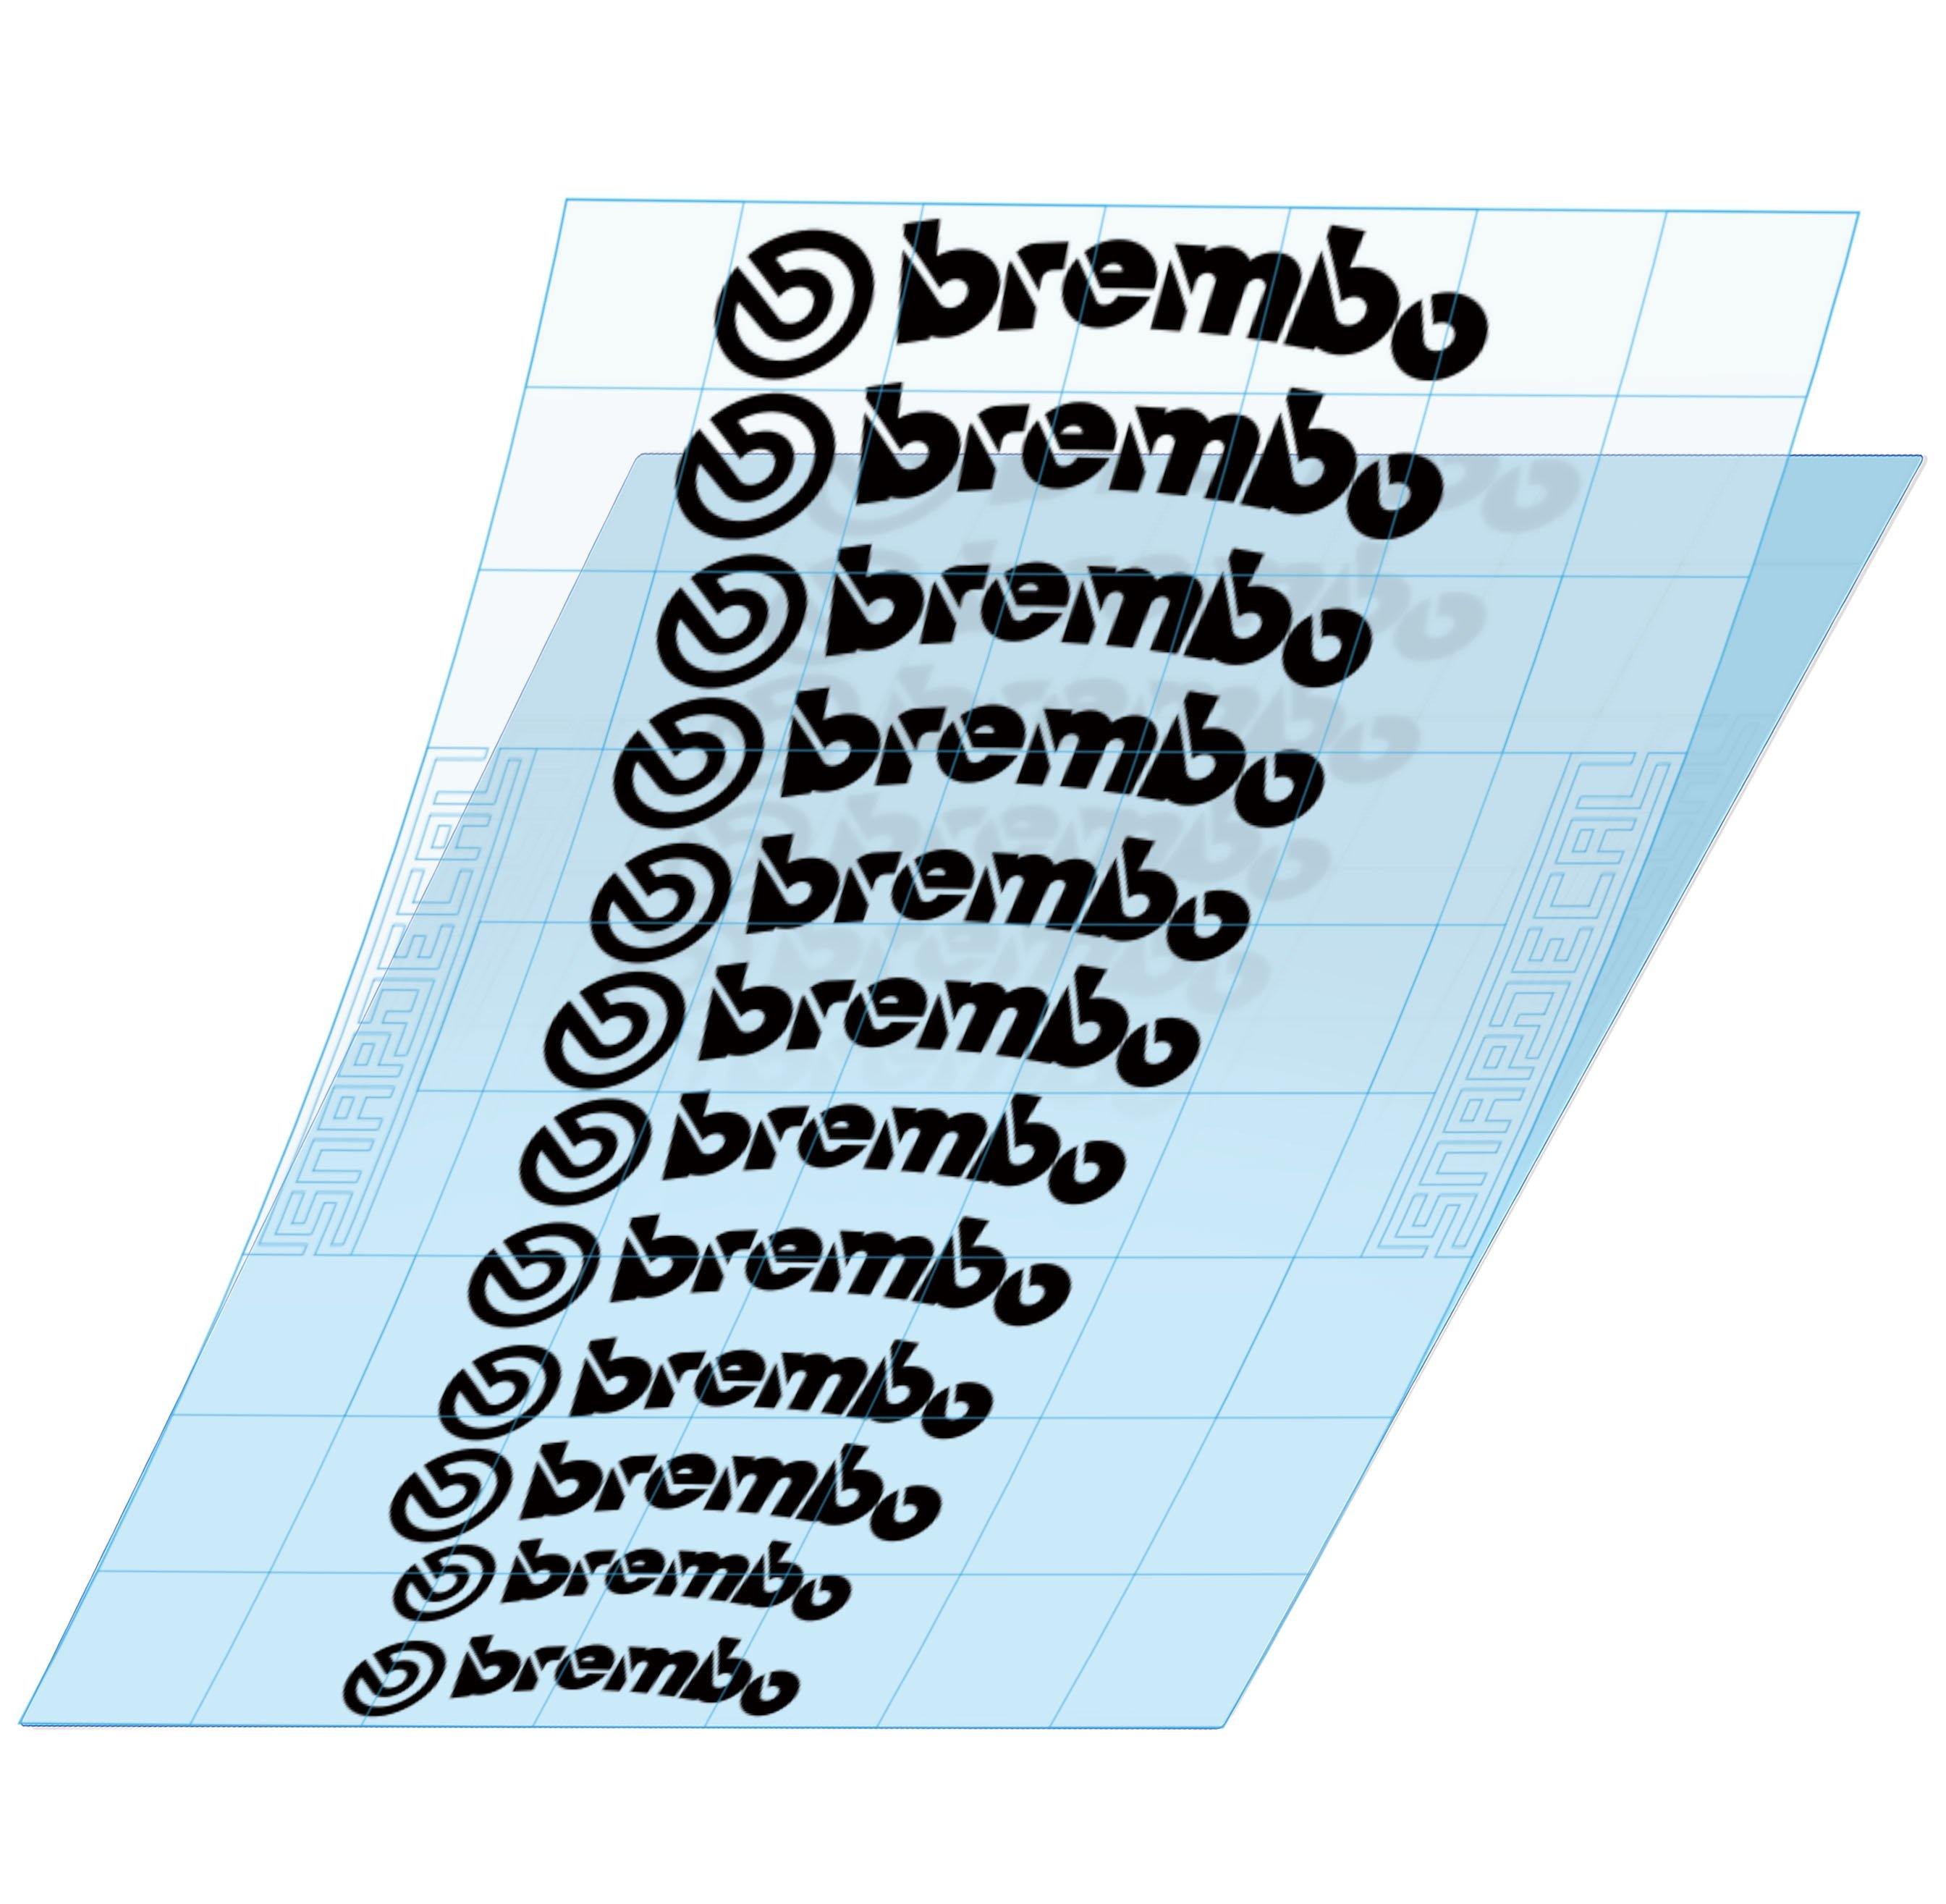 BREMBO Premium Brake Caliper Decals Stickers Kit 1 2 3 4 5 6 i